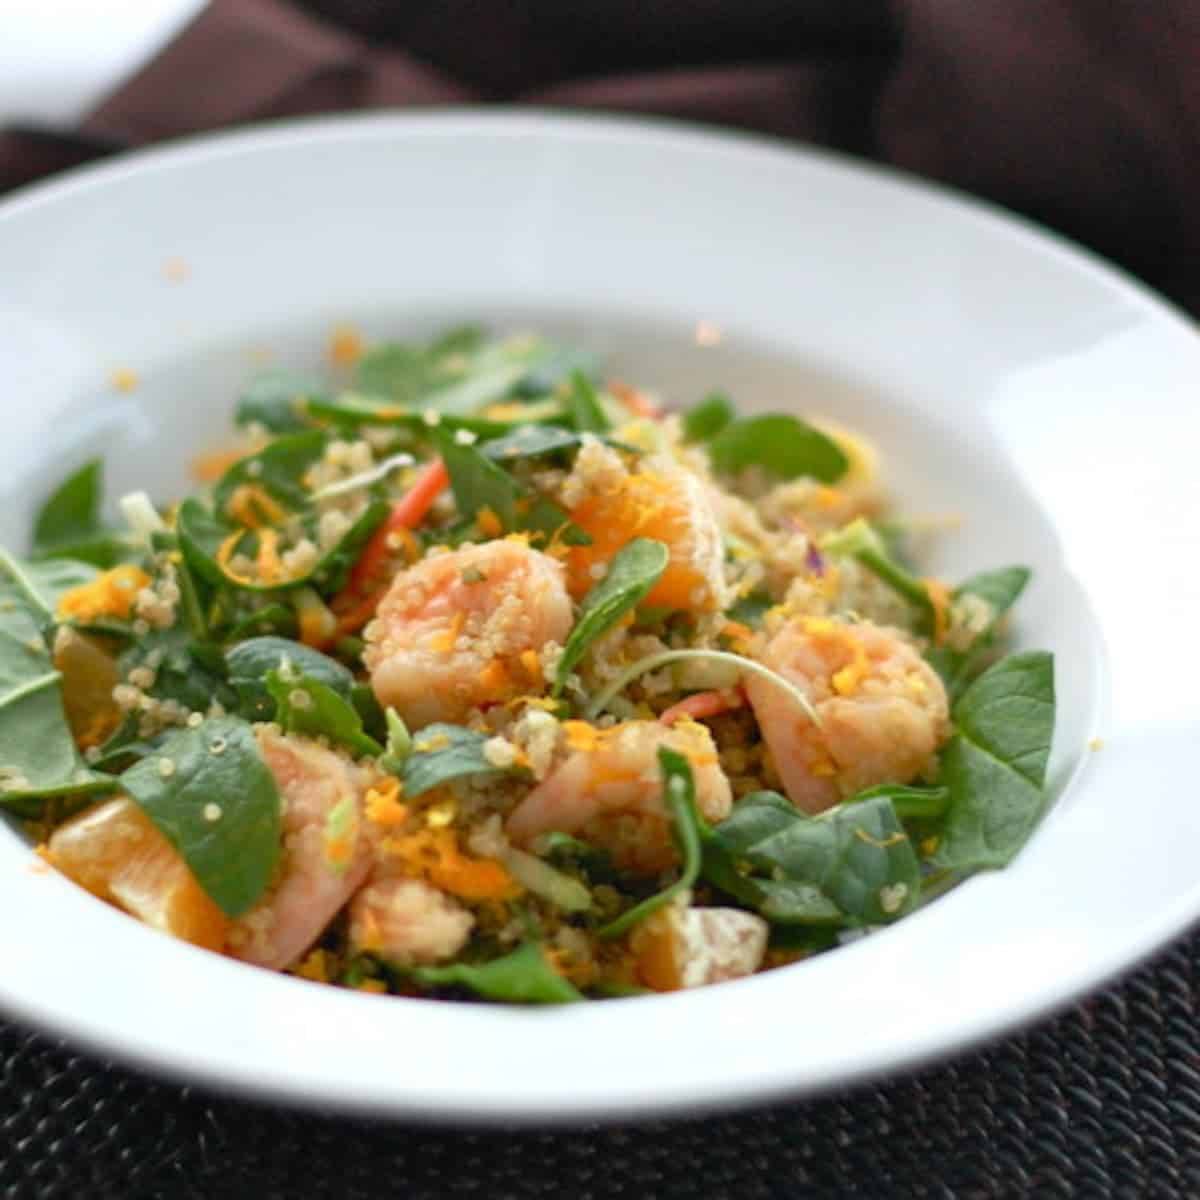 Shrimp and quinoa salad in a white bowl.